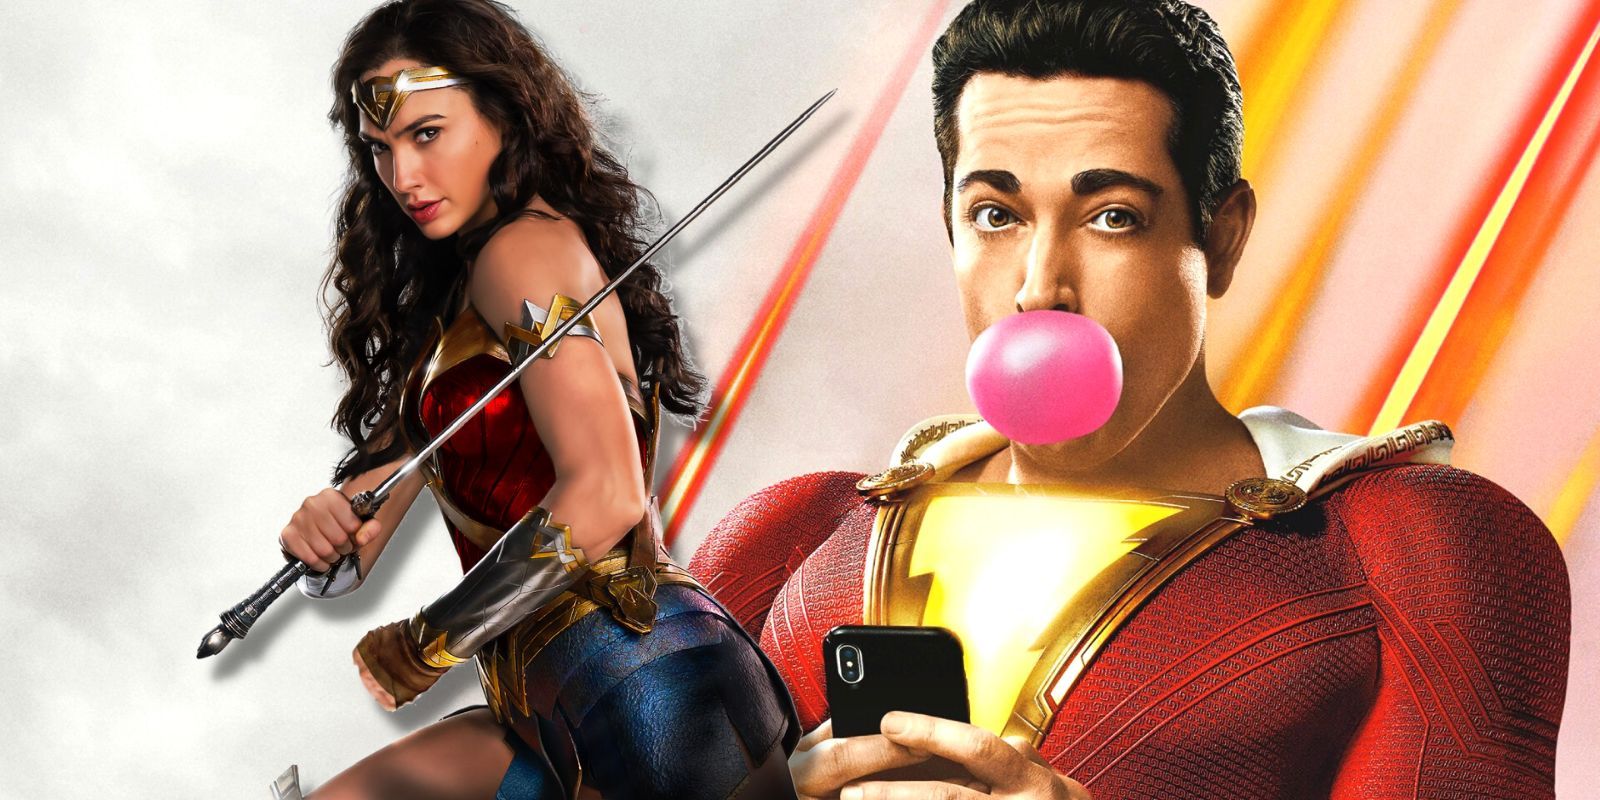 Wonder Woman using her sword alongside Shazam blowing bubble gum